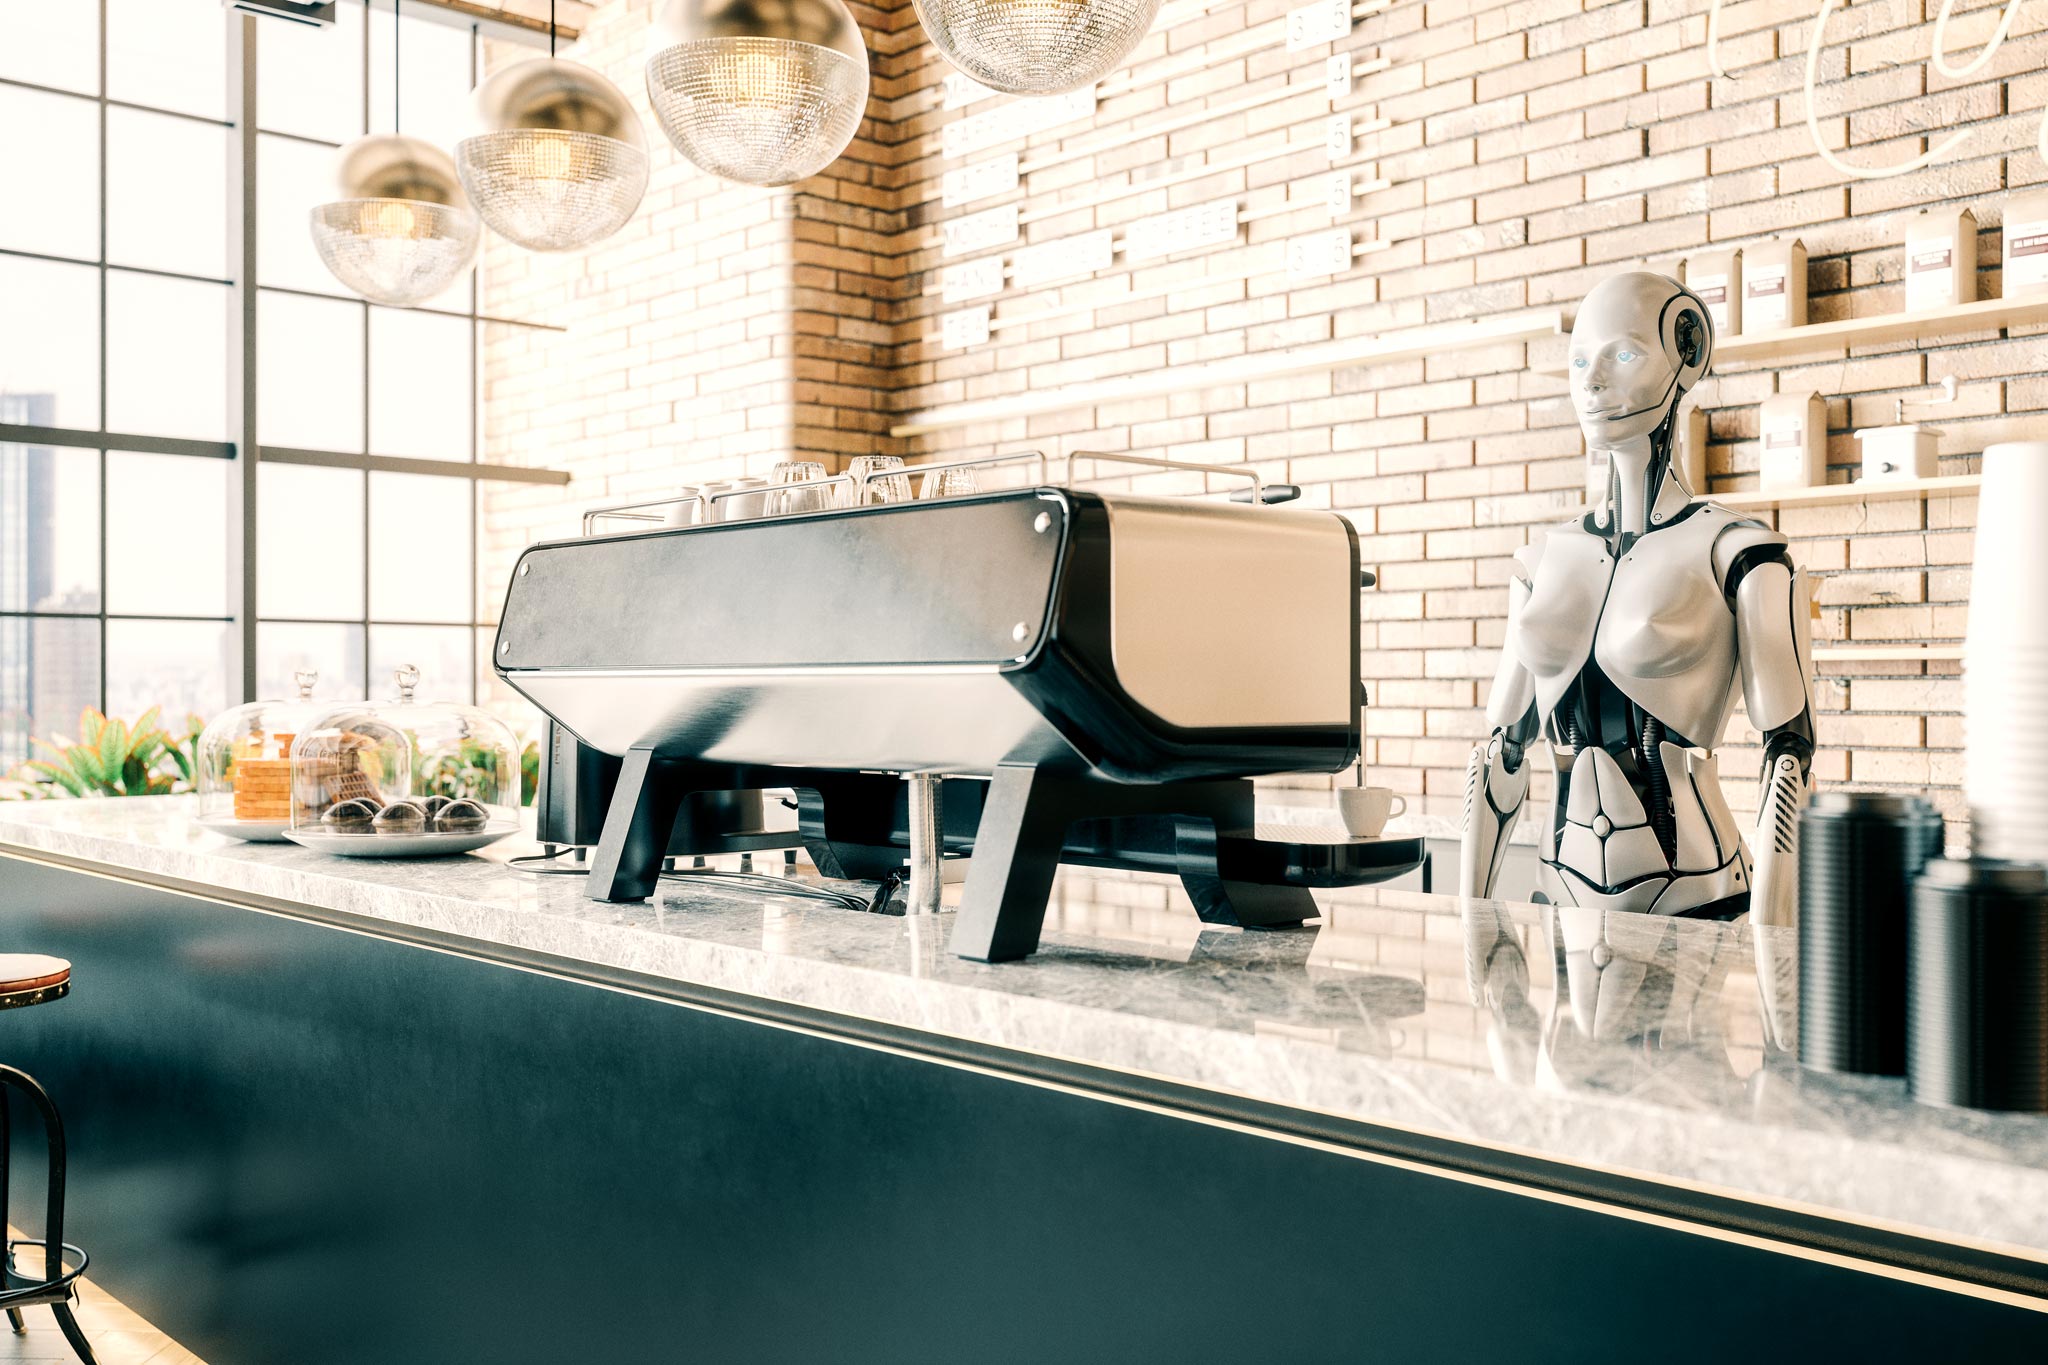 Third Wave Coffee Shop With Robot Barista. Image: iStock.com/imaginima